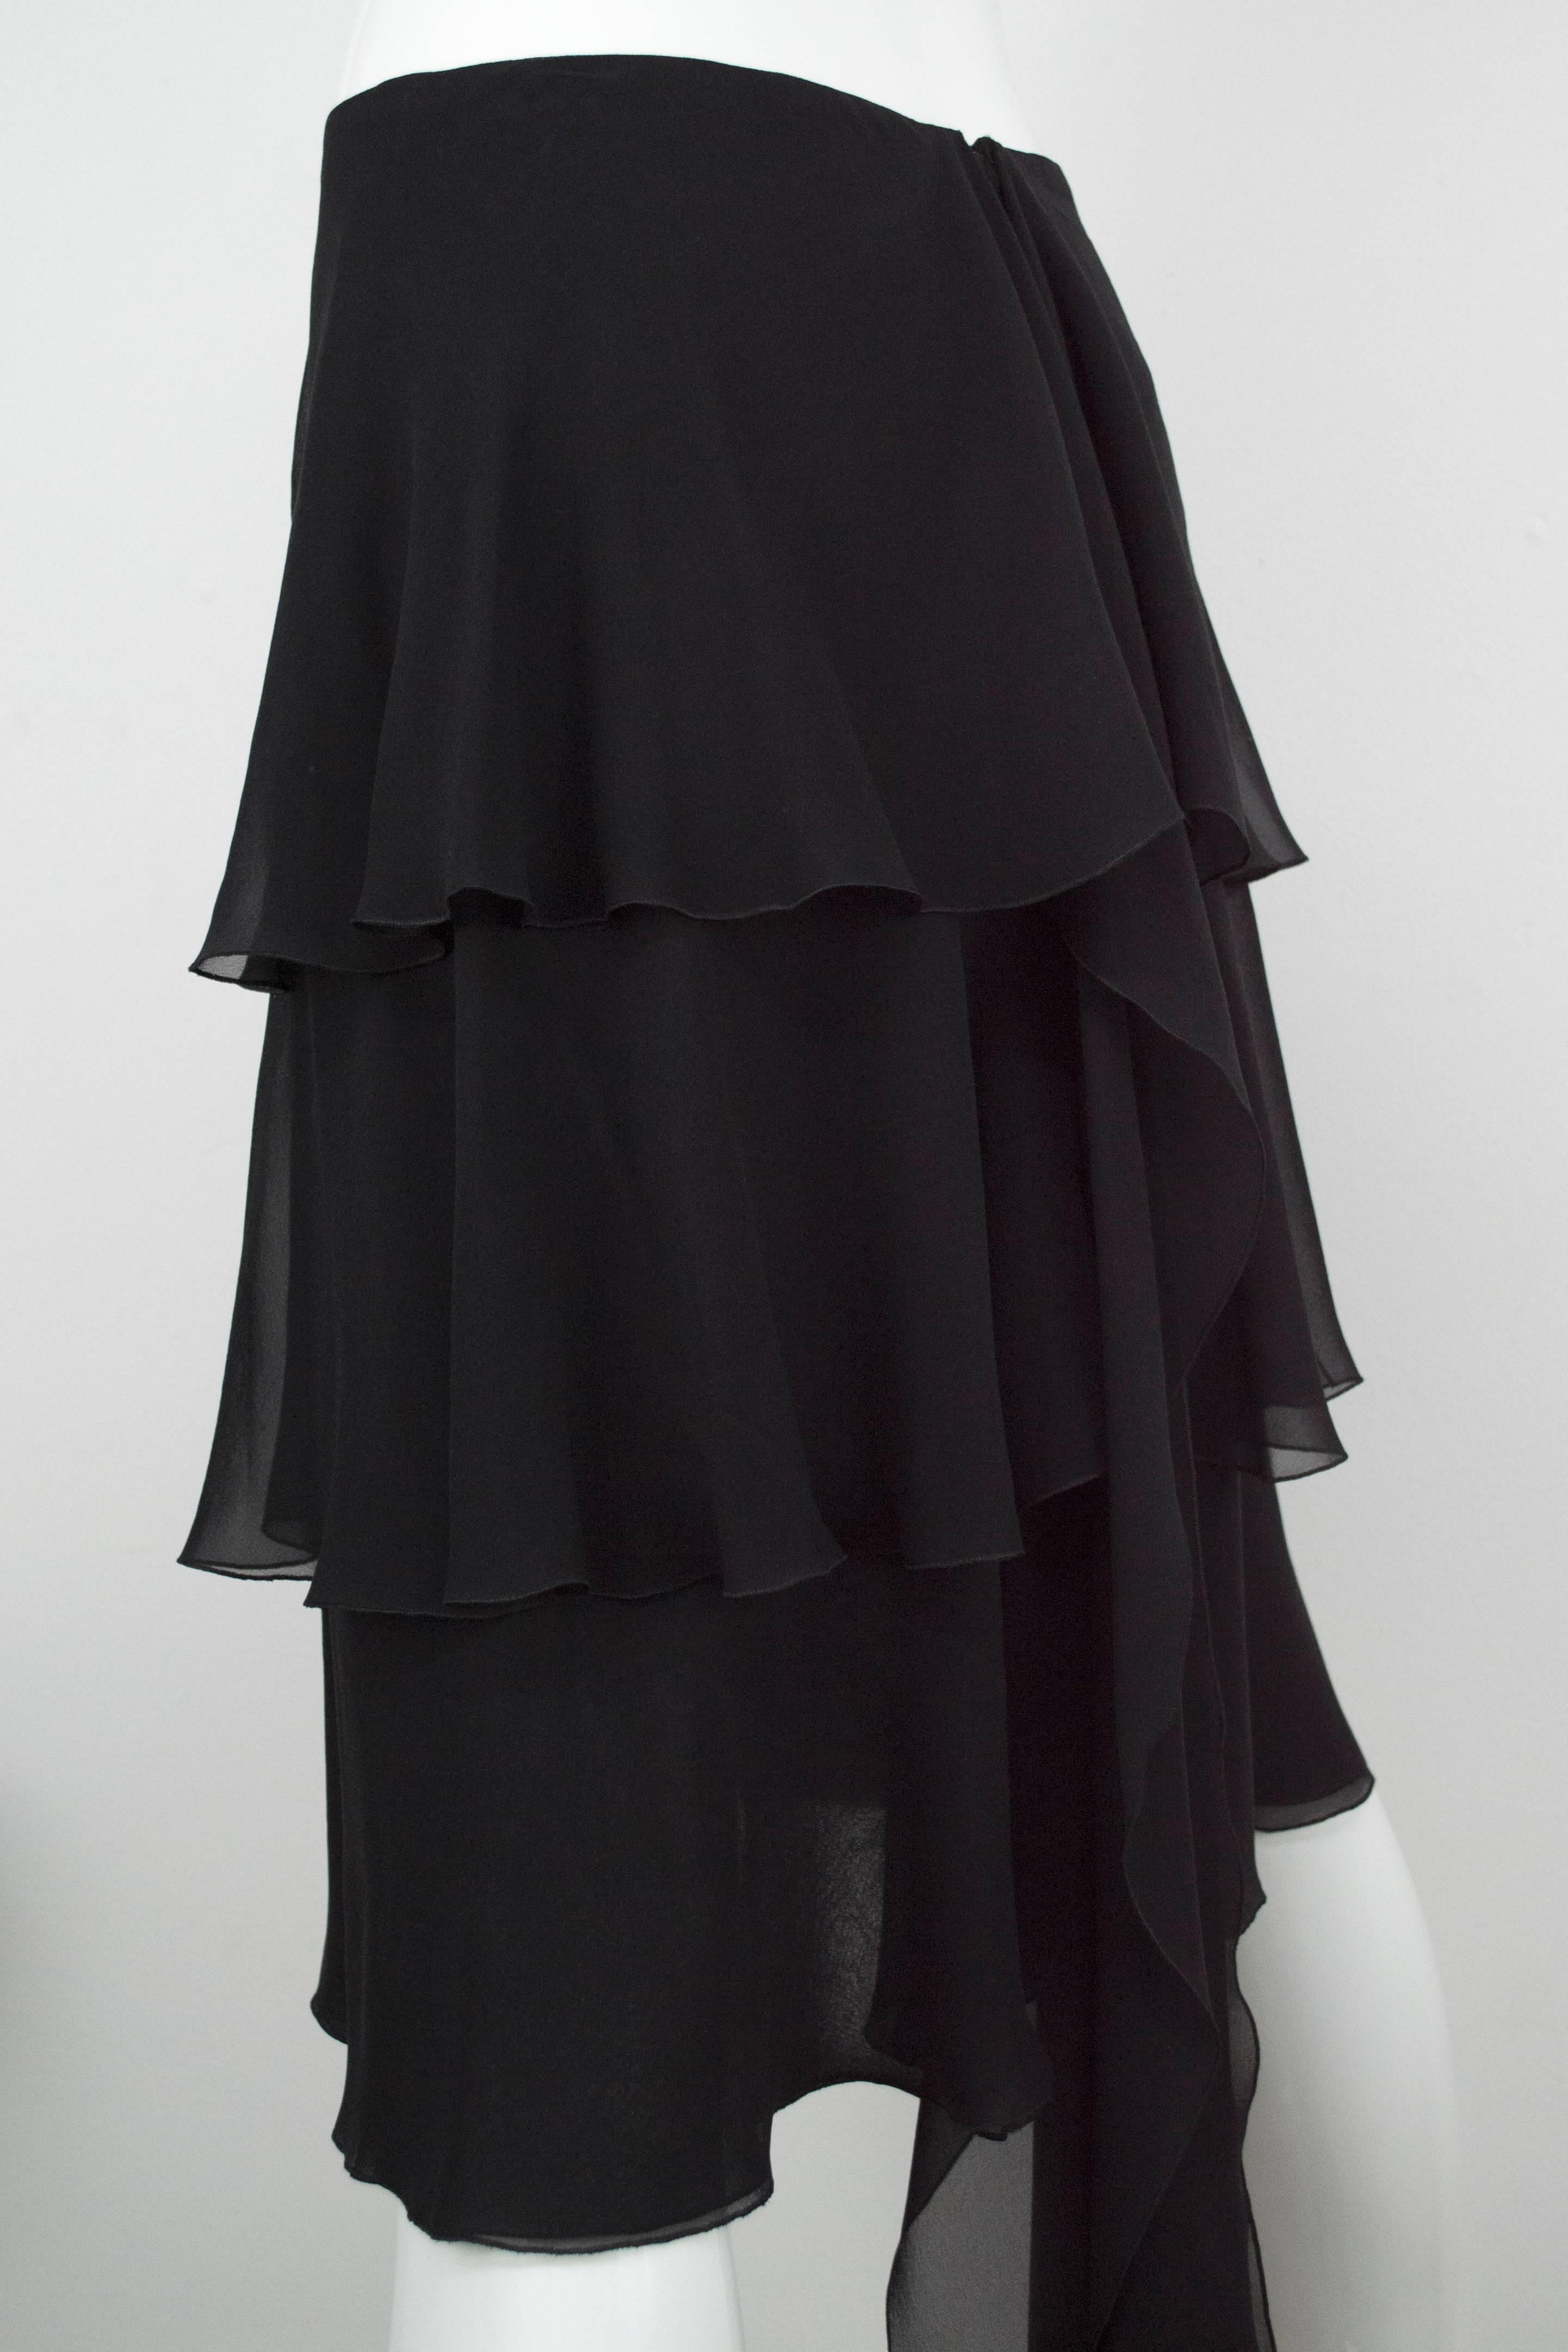 Chanel Black Chiffon Ruffle Train Skirt 38 For Sale 1